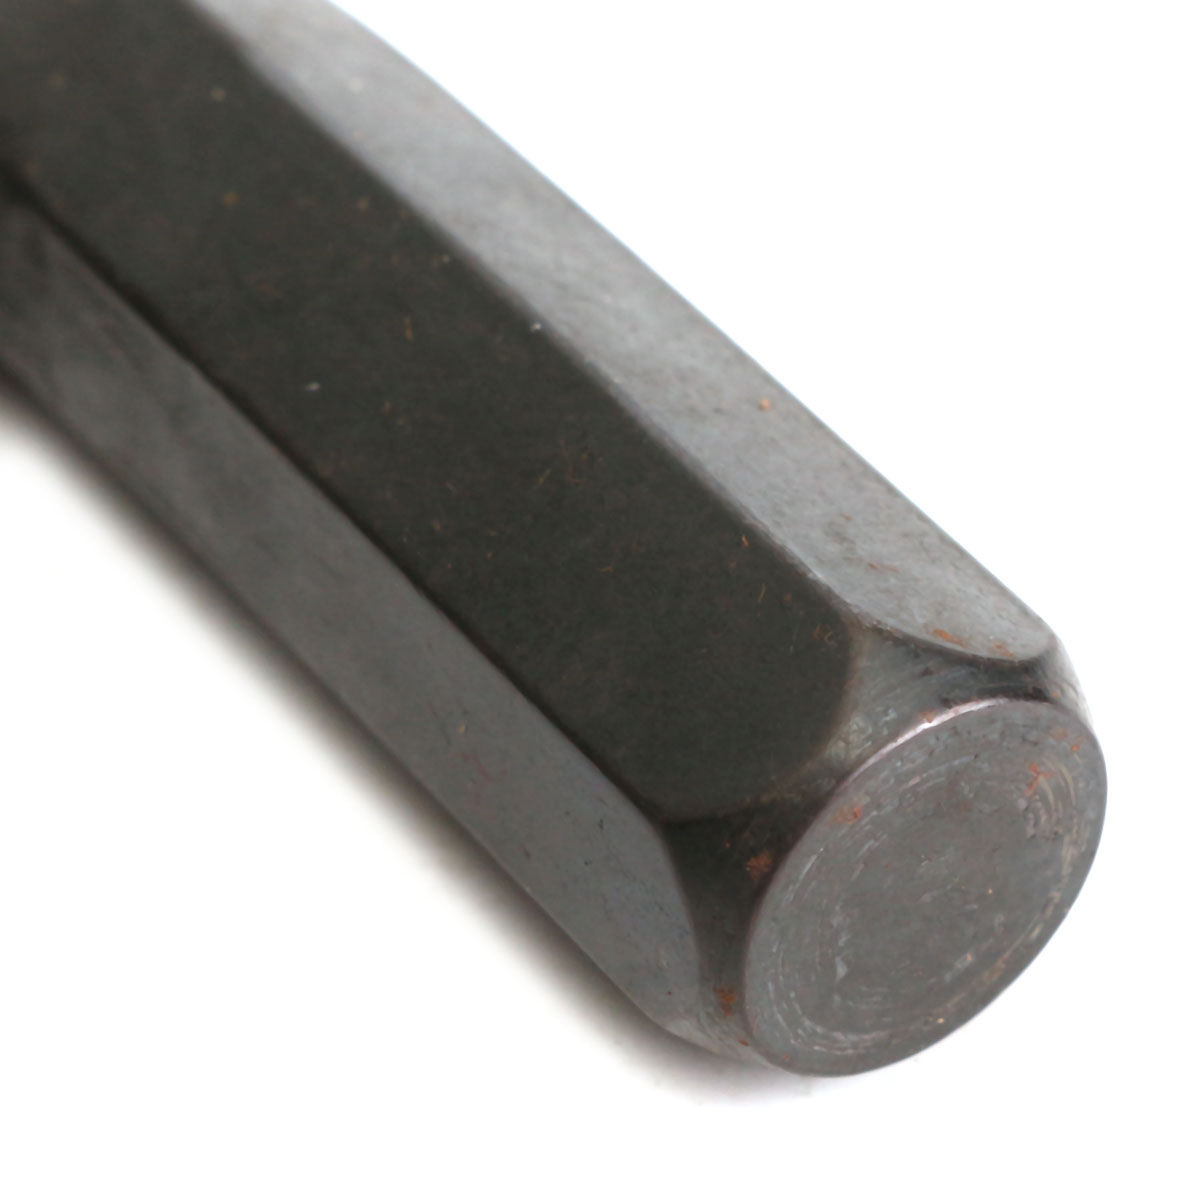 12mm-Steel-L-Shaped-Metric-Hexagon-Key-Hex-Allen-Wrench-Spanner-Stick-Tool-Black-1047502